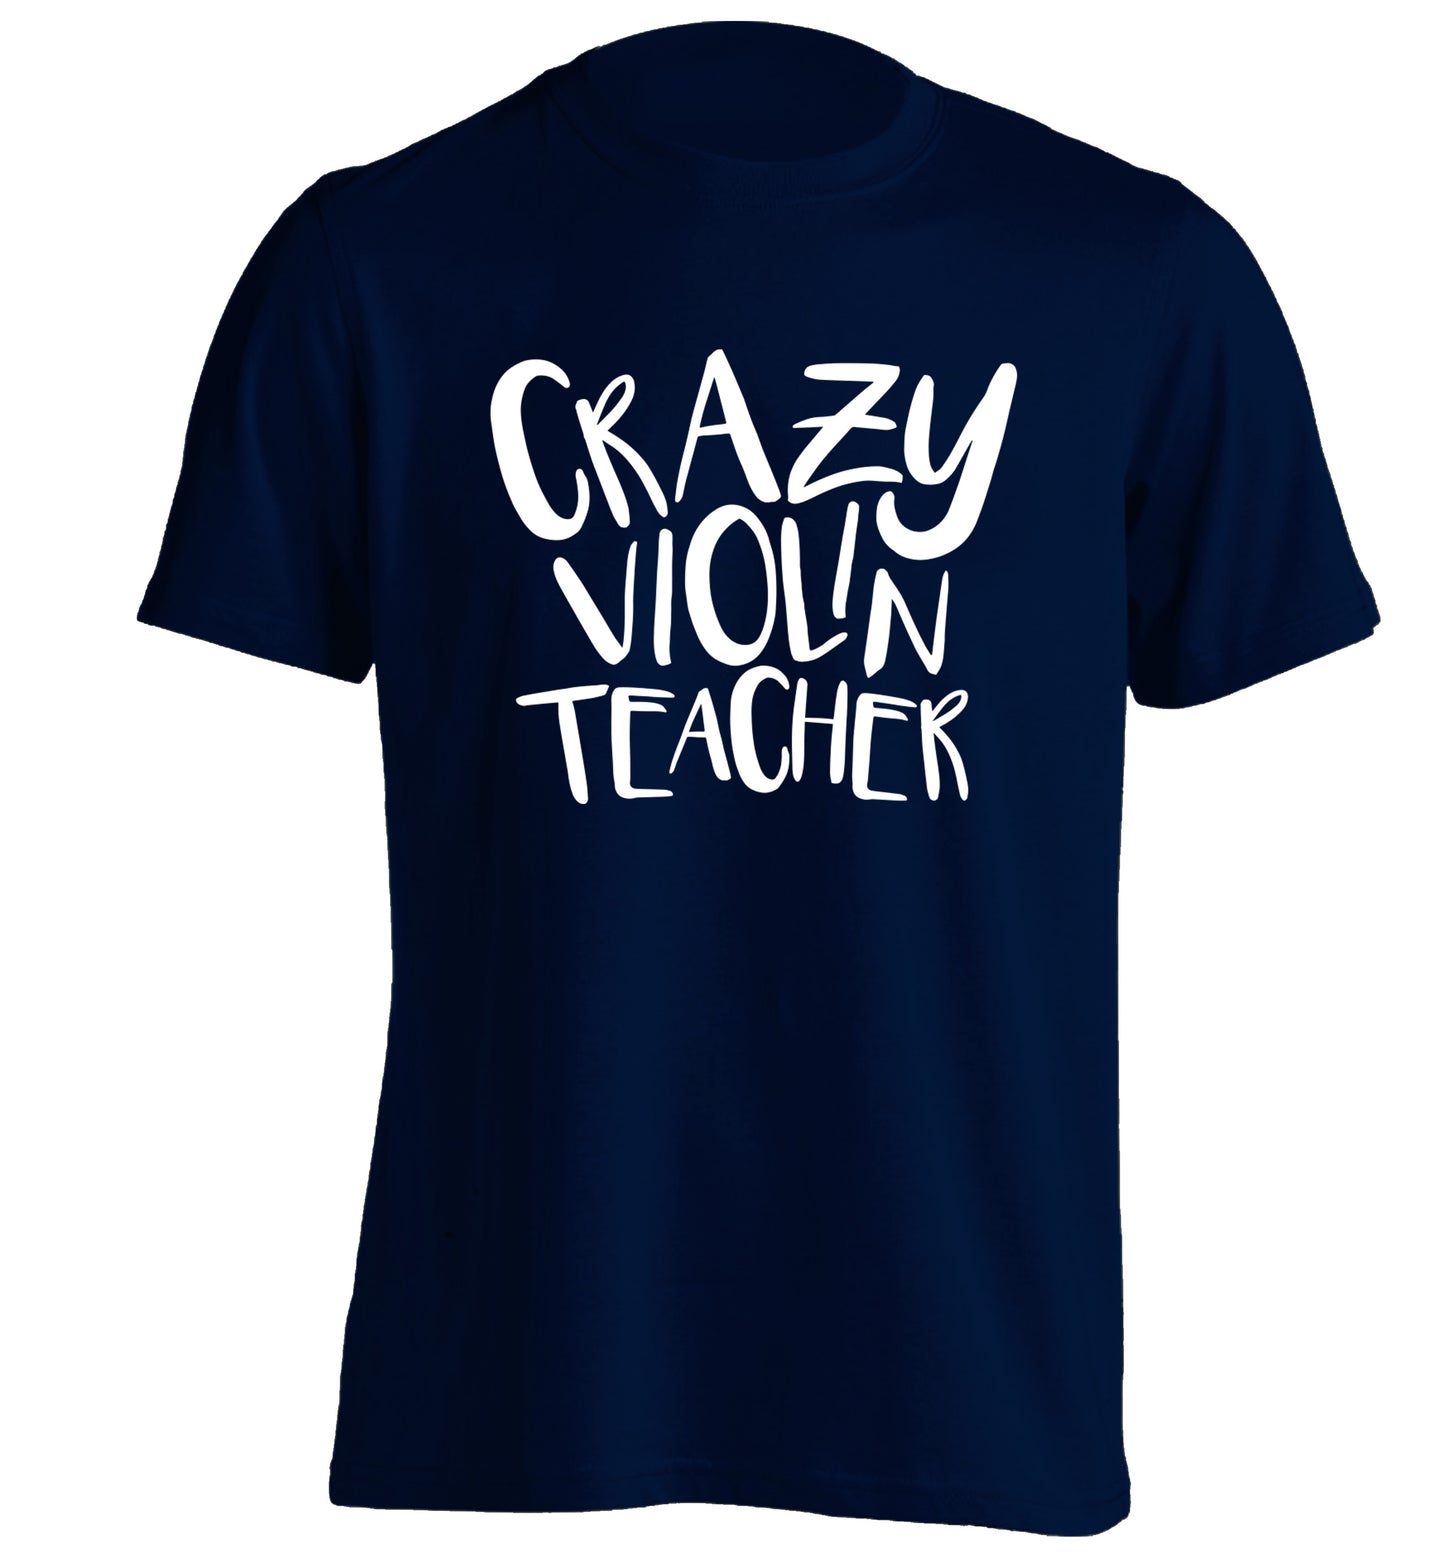 Crazy violin teacher adults unisex navy Tshirt 2XL